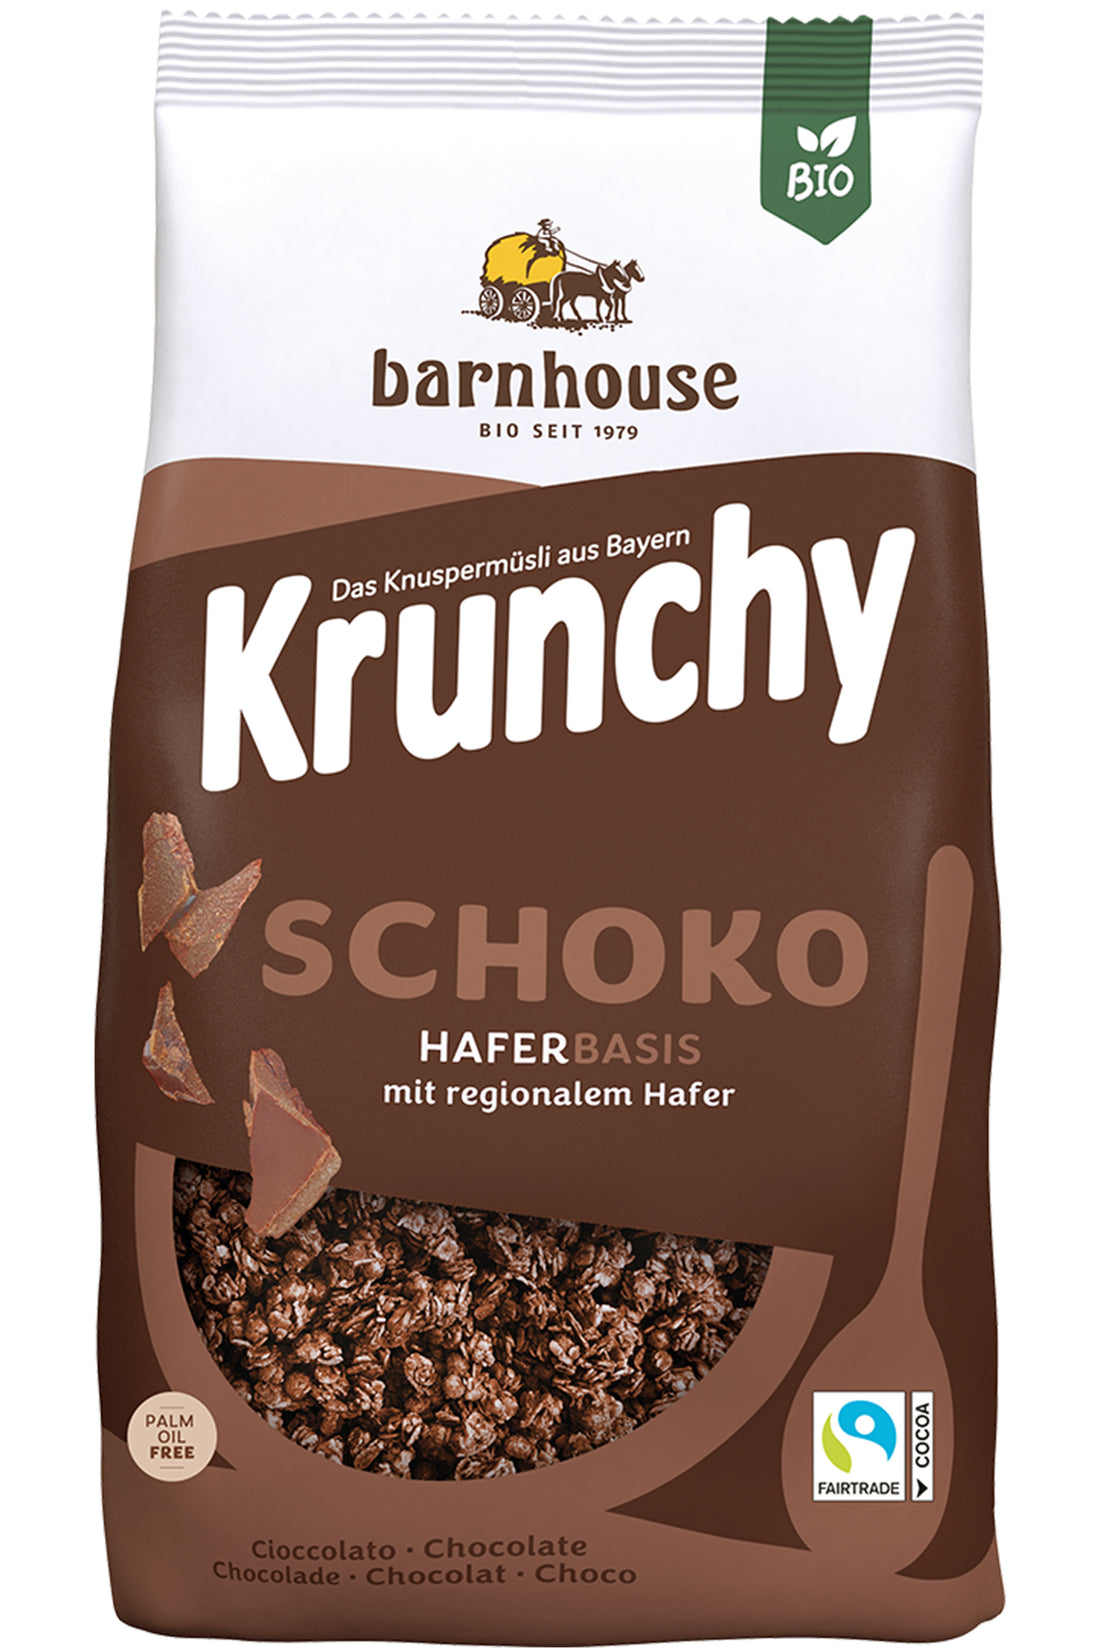 Krunchy Chocolate